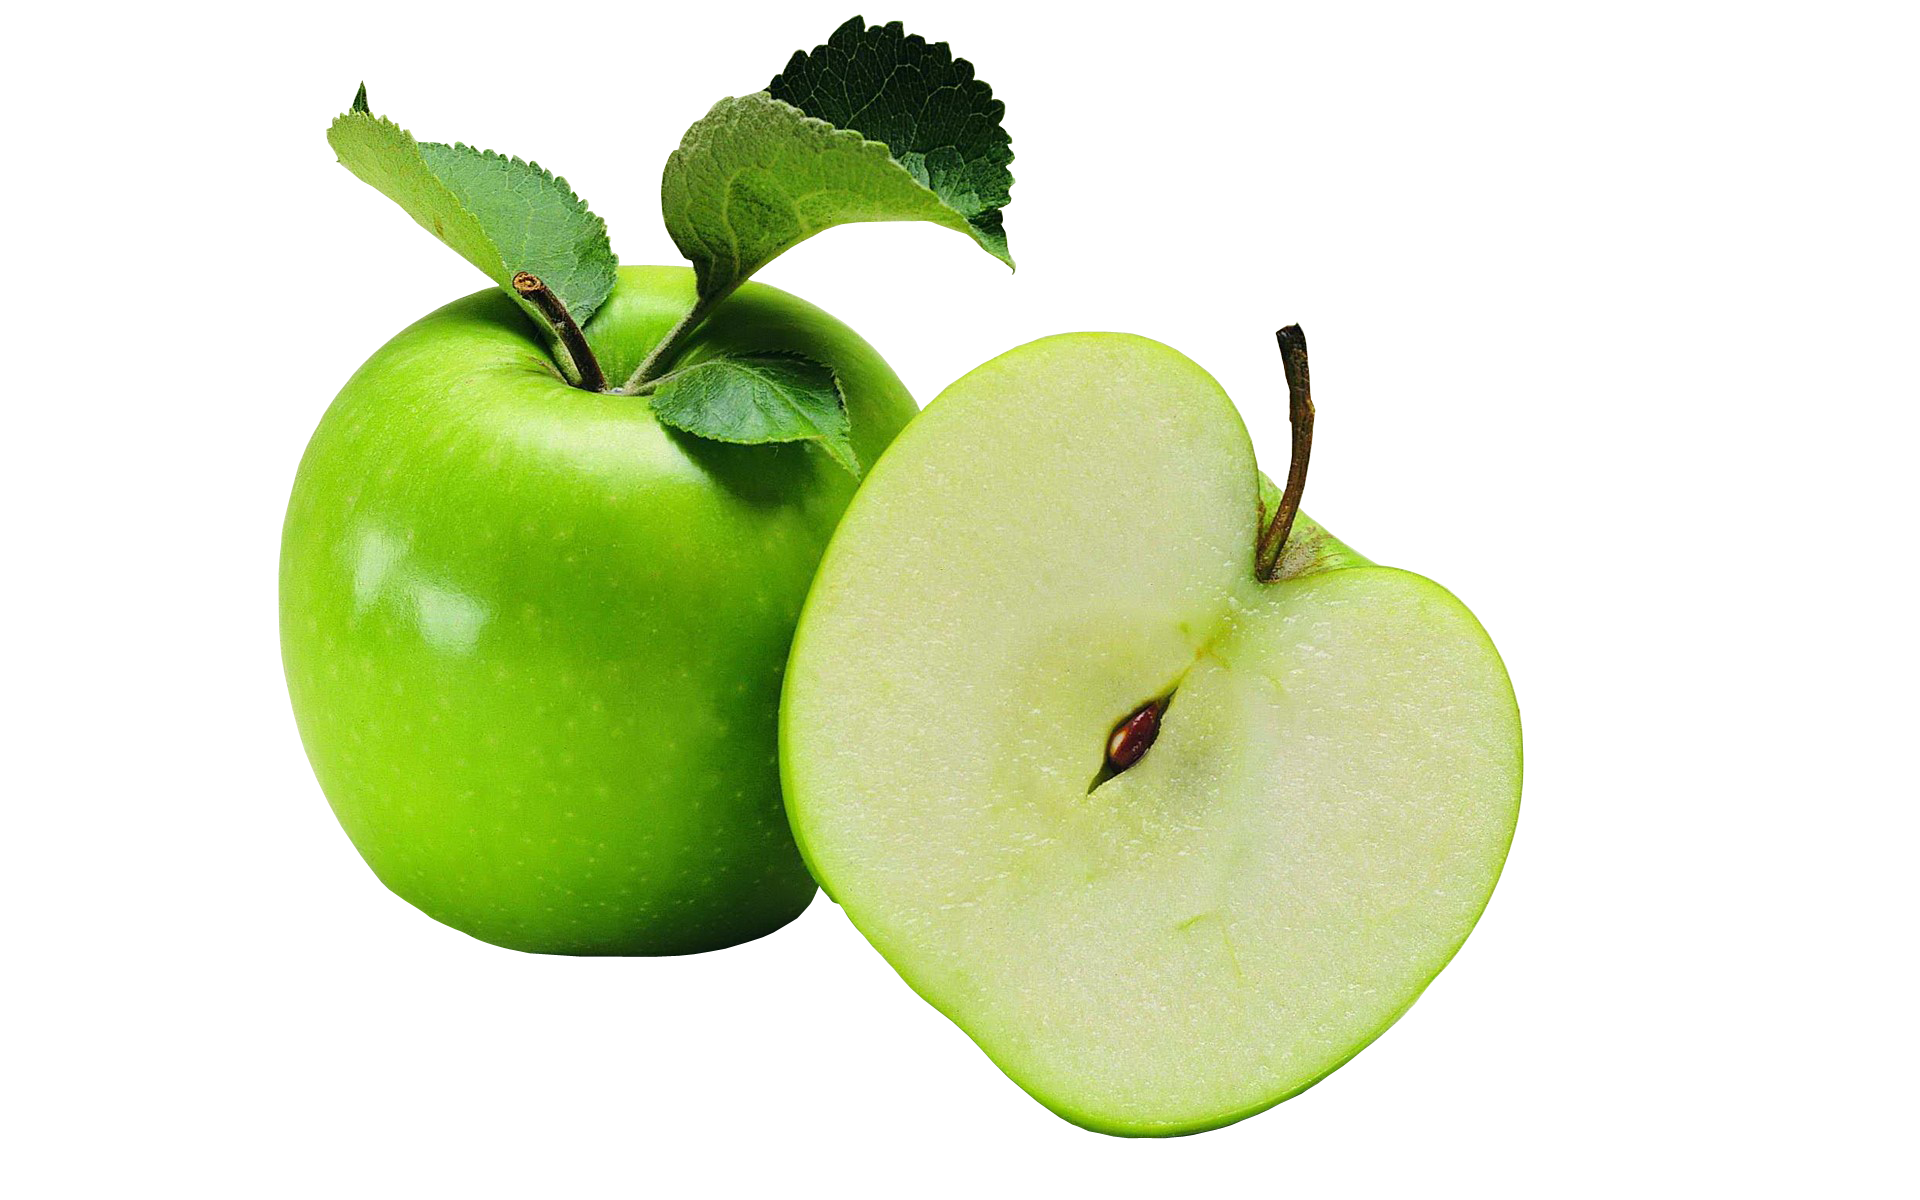 Cut Green Apple